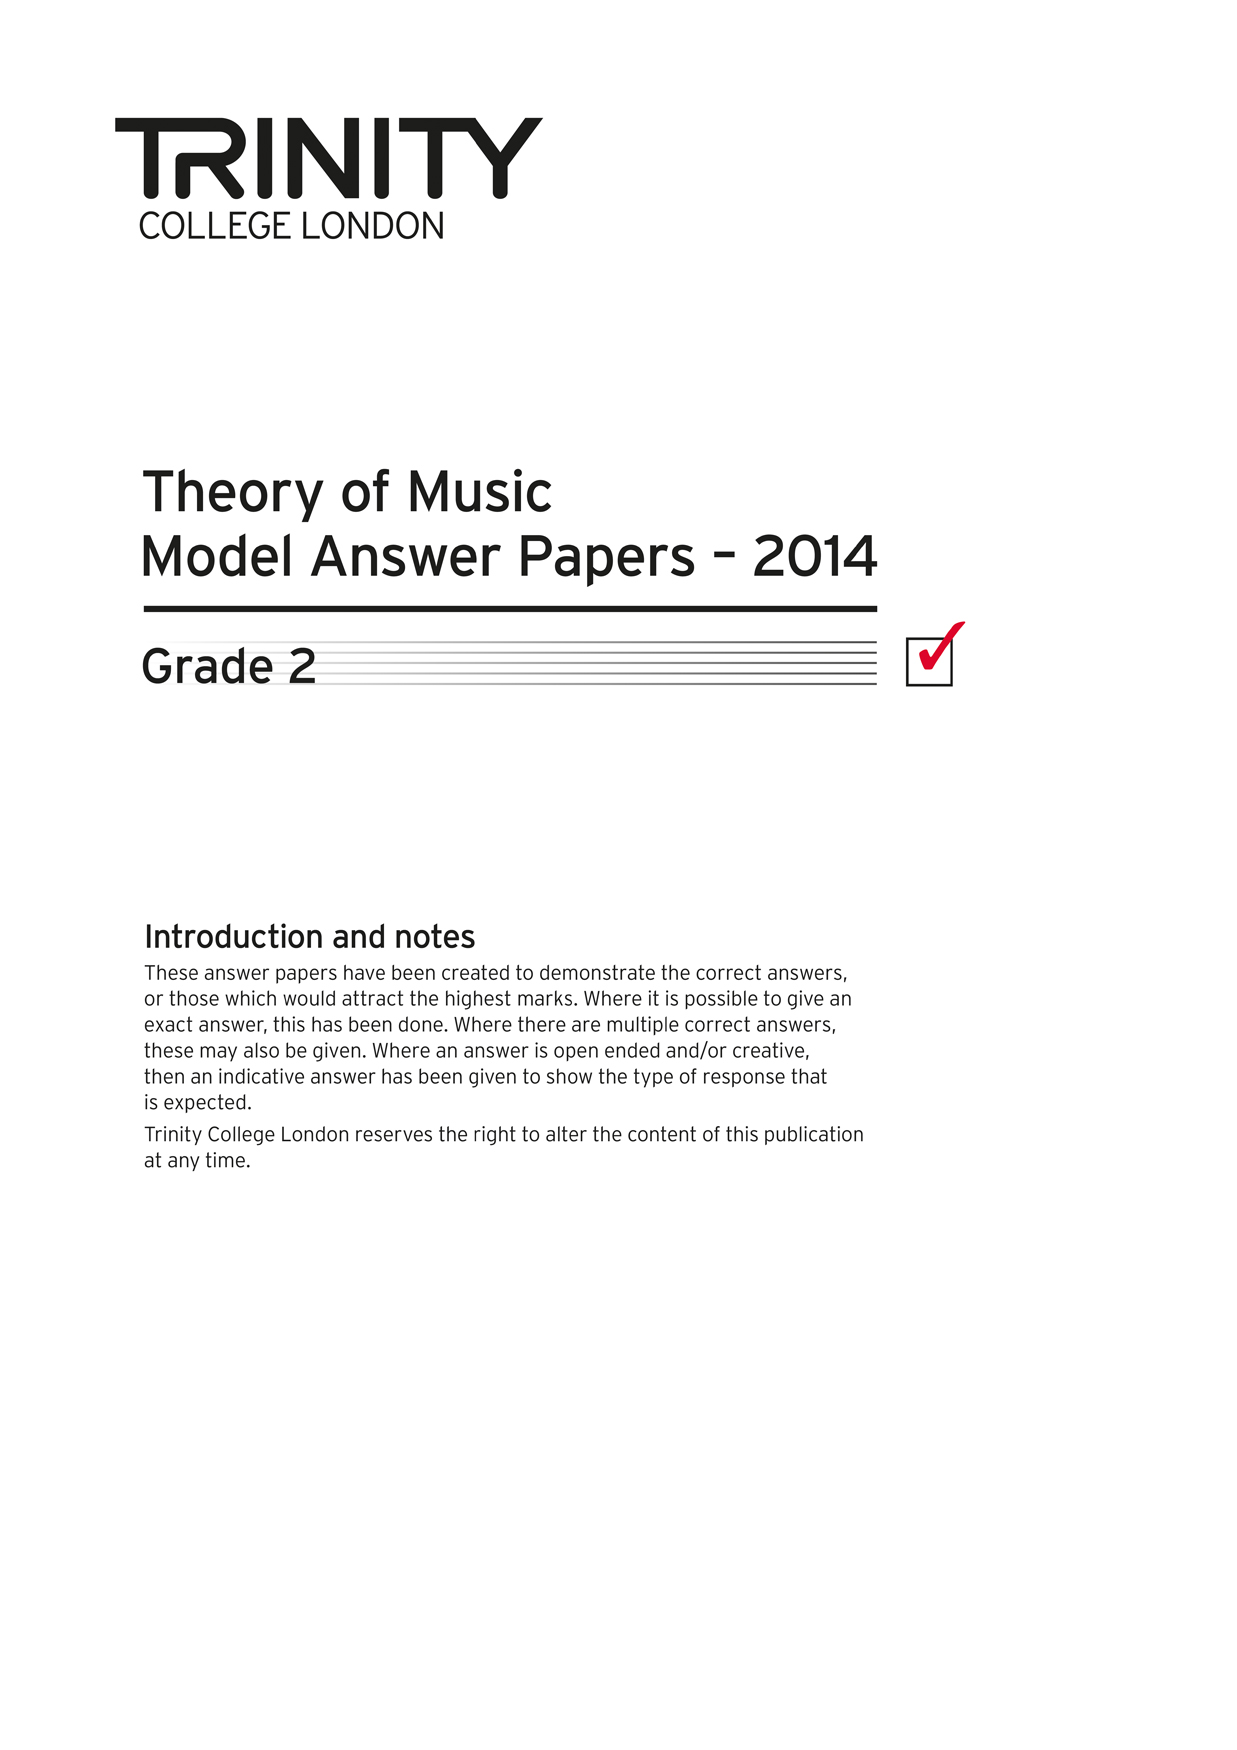 Theory Model Answers 2014 - Grade 2: Theory